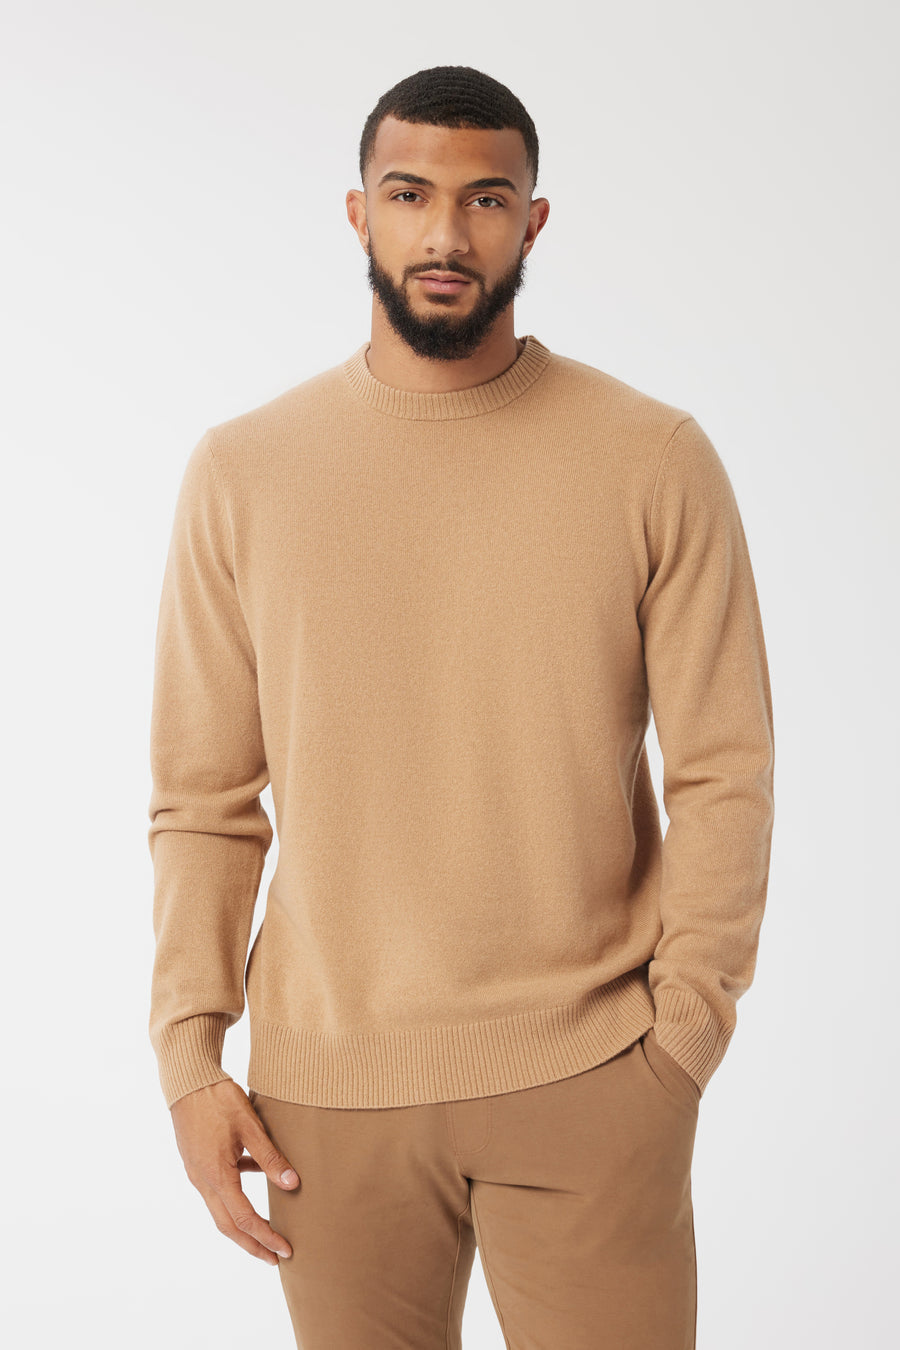 GOOD MAN BRAND camel cashmere sweater